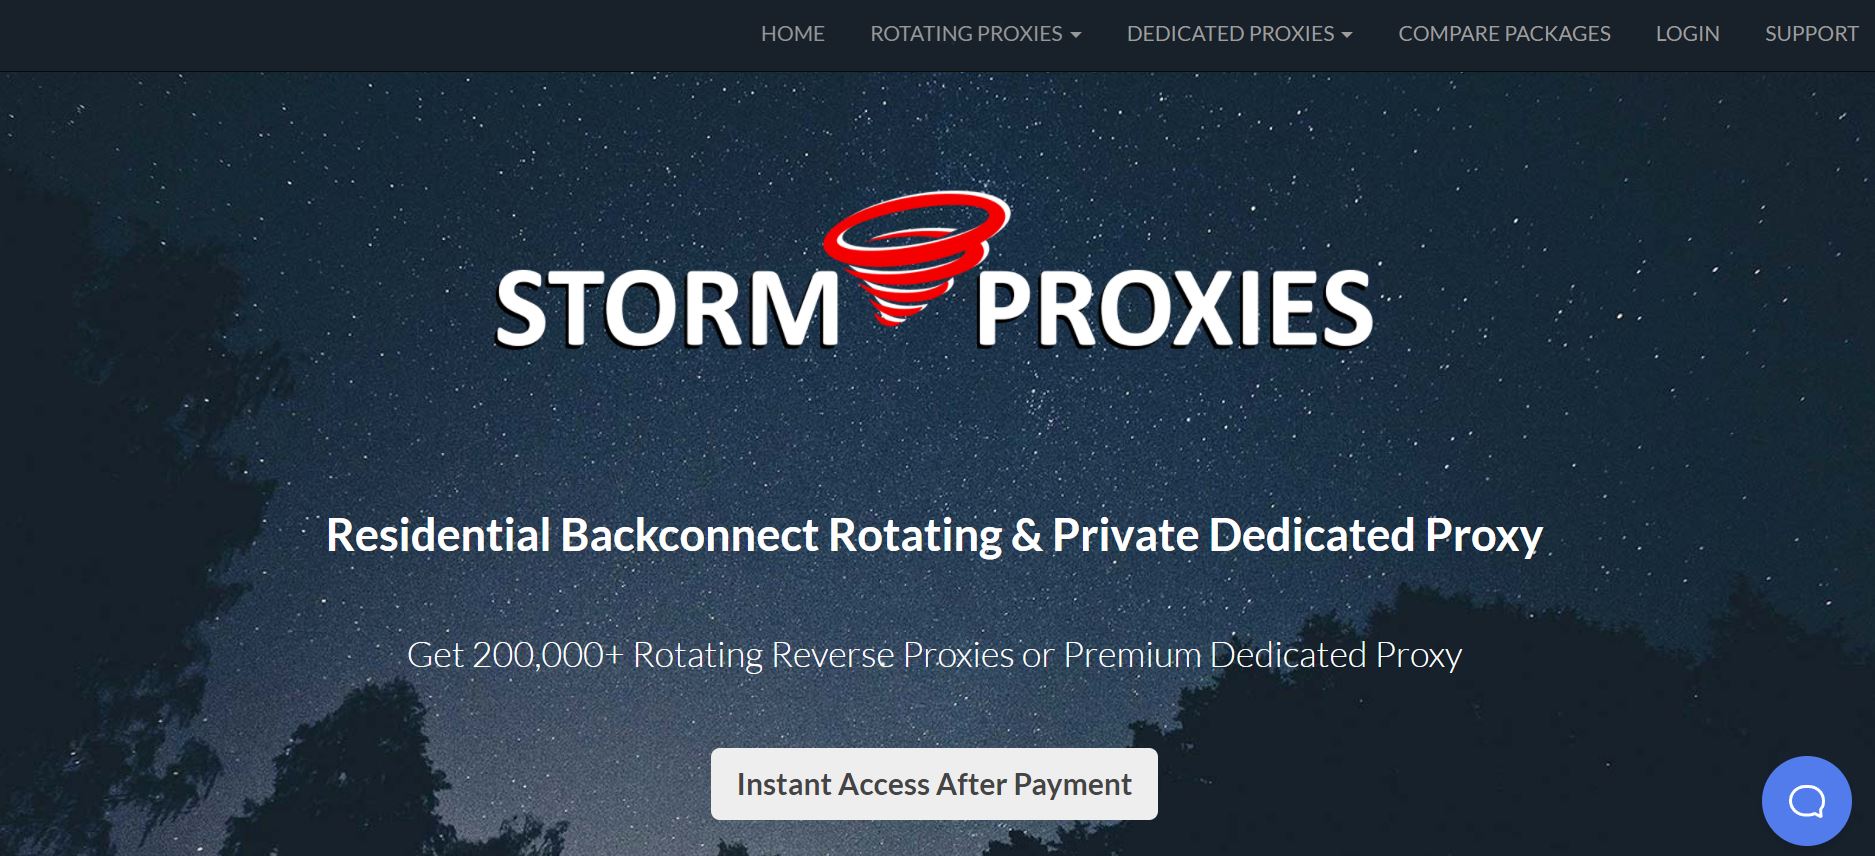 StormProxies - Best Telegram Proxies